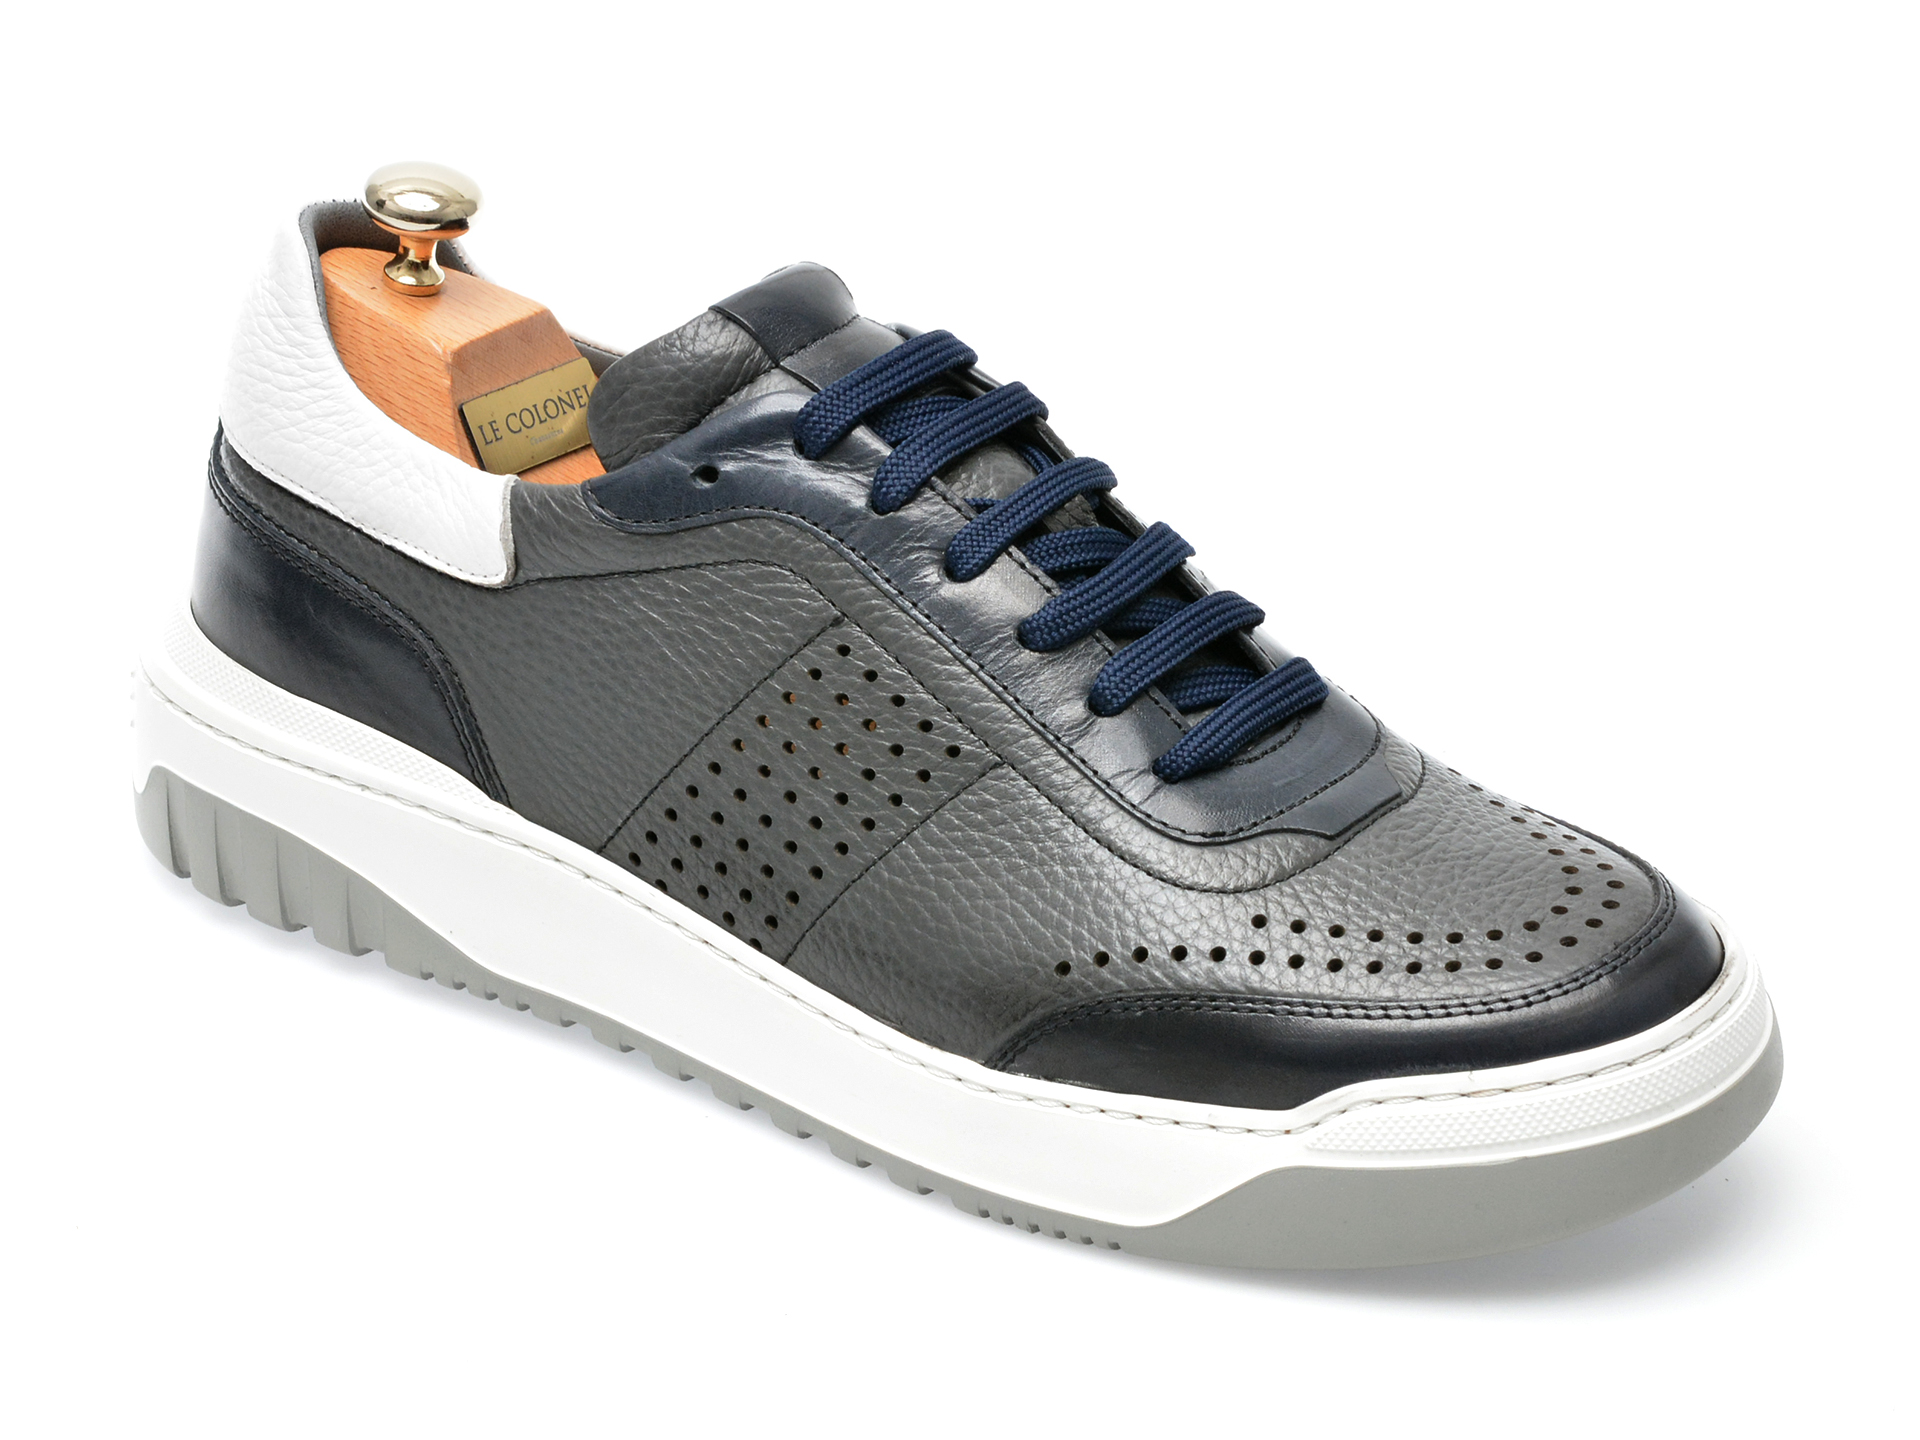 Pantofi LE COLONEL gri, 66501, din piele naturala /barbati/pantofi